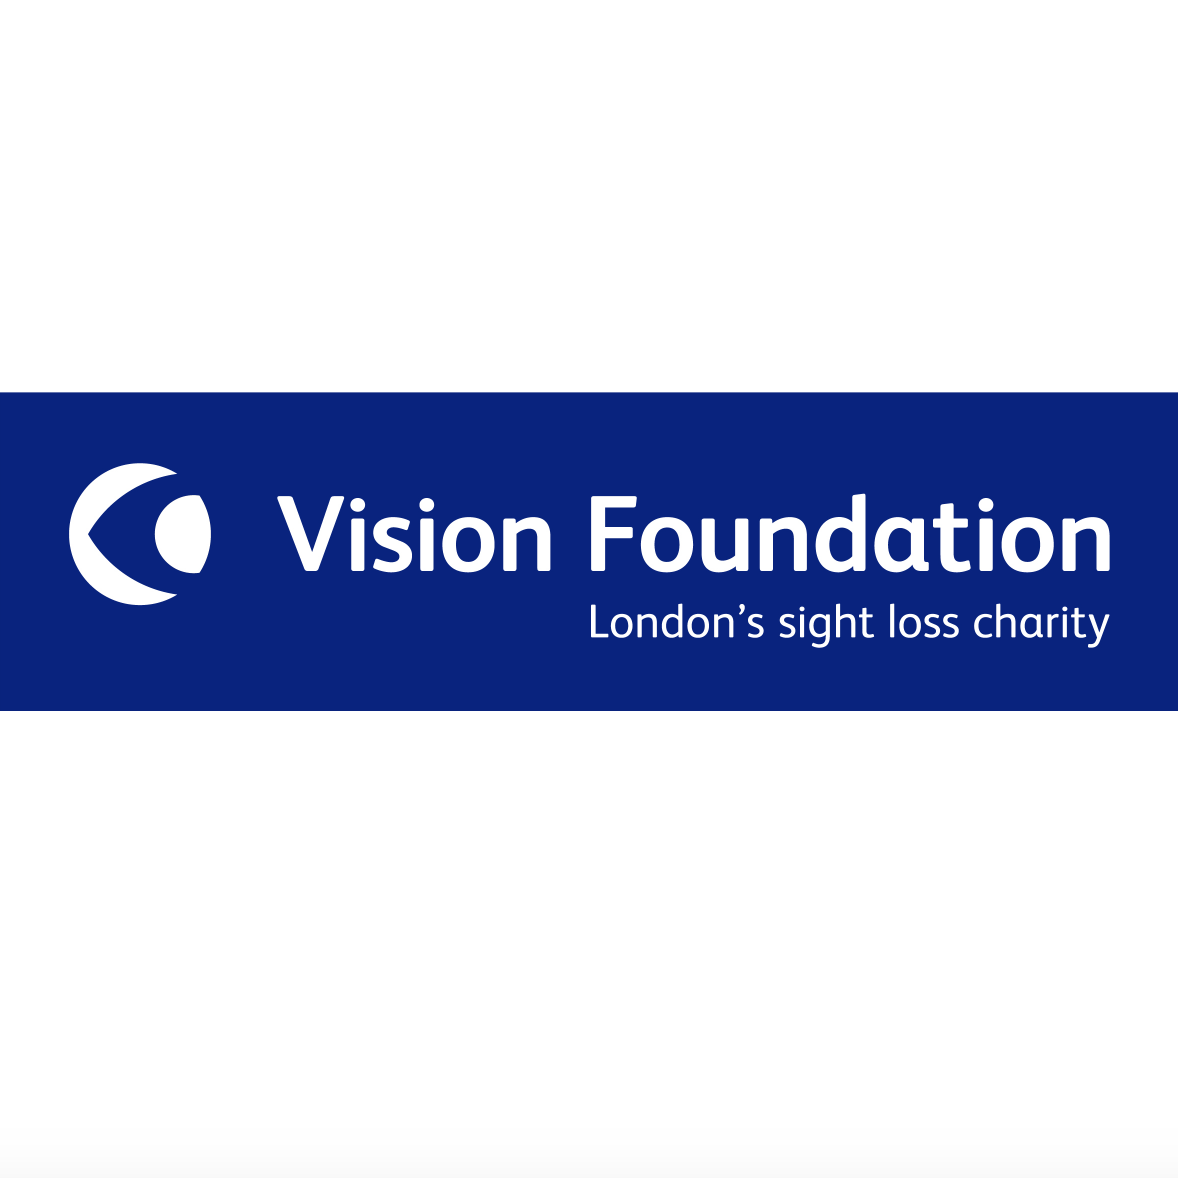 Vision Foundation logo